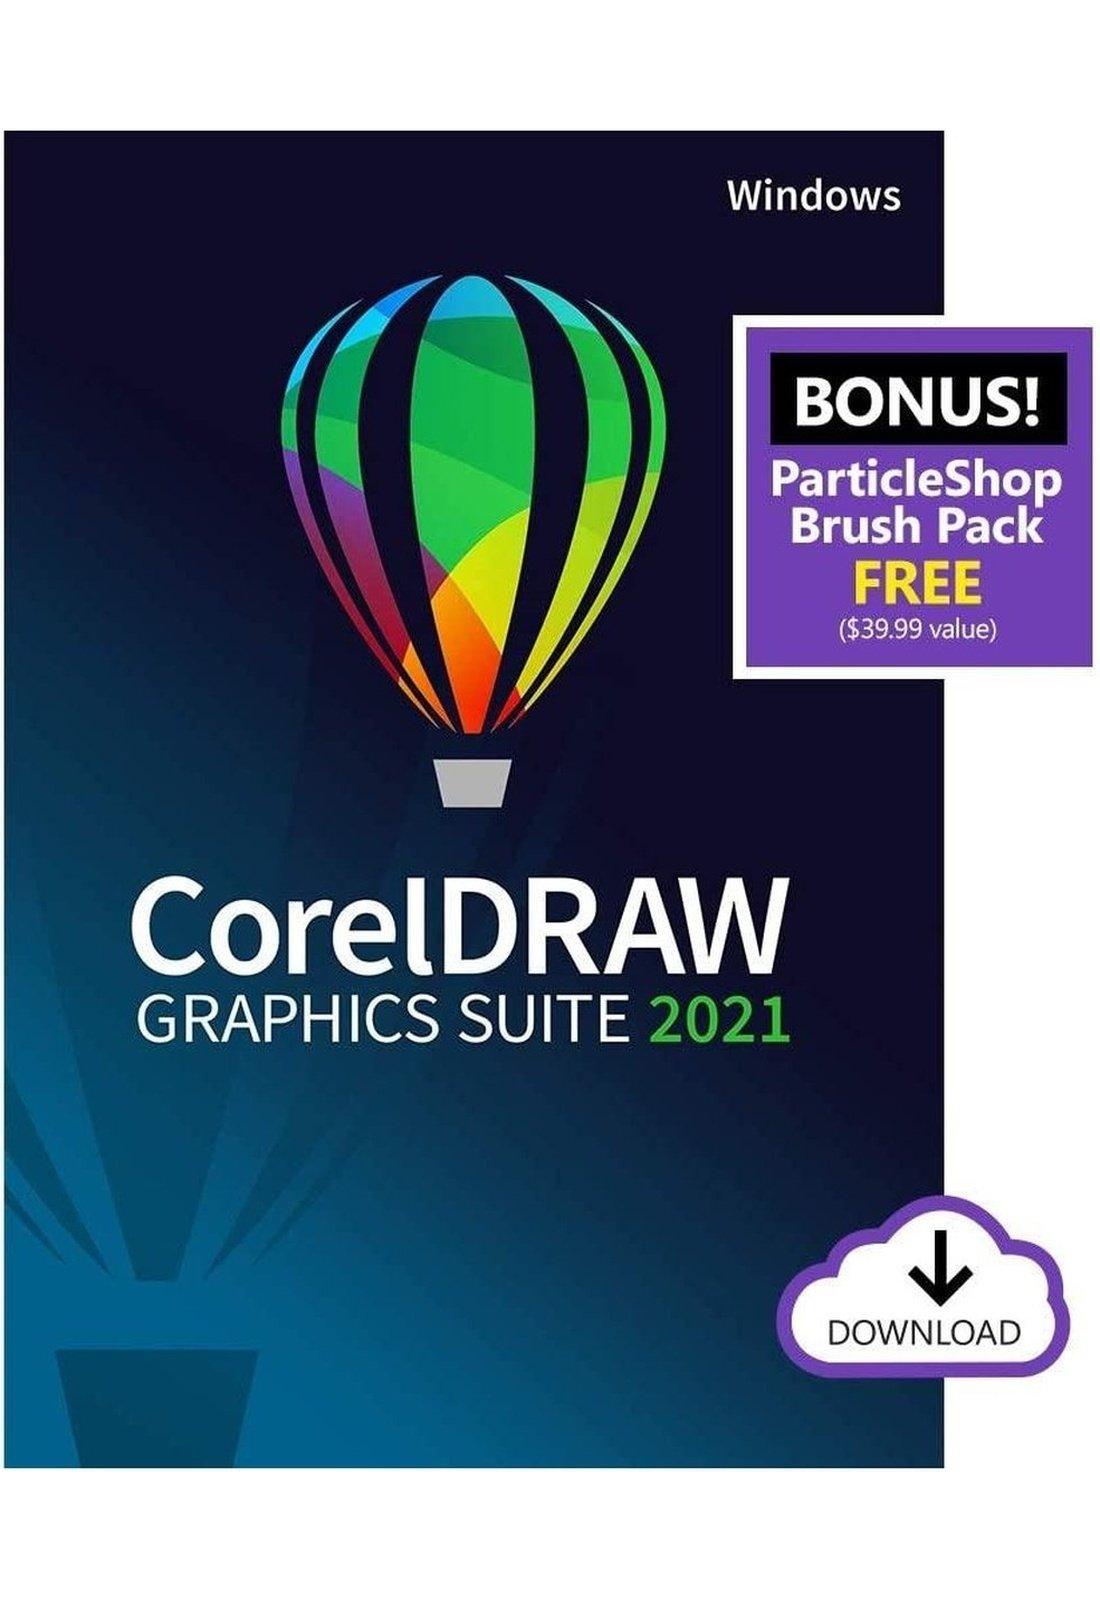 CorelDRAW Graphics Suite 2021 - Instant Download for Windows (1 Computer) - SoftwareCW - Authorized Reseller